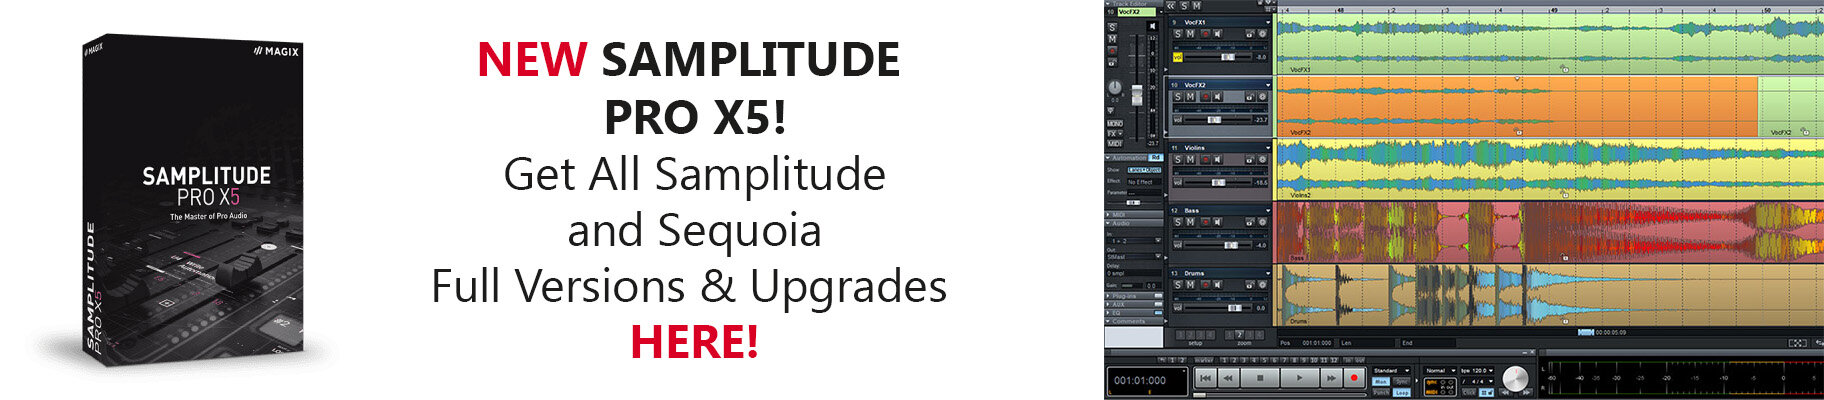 Samplitude Pro X5